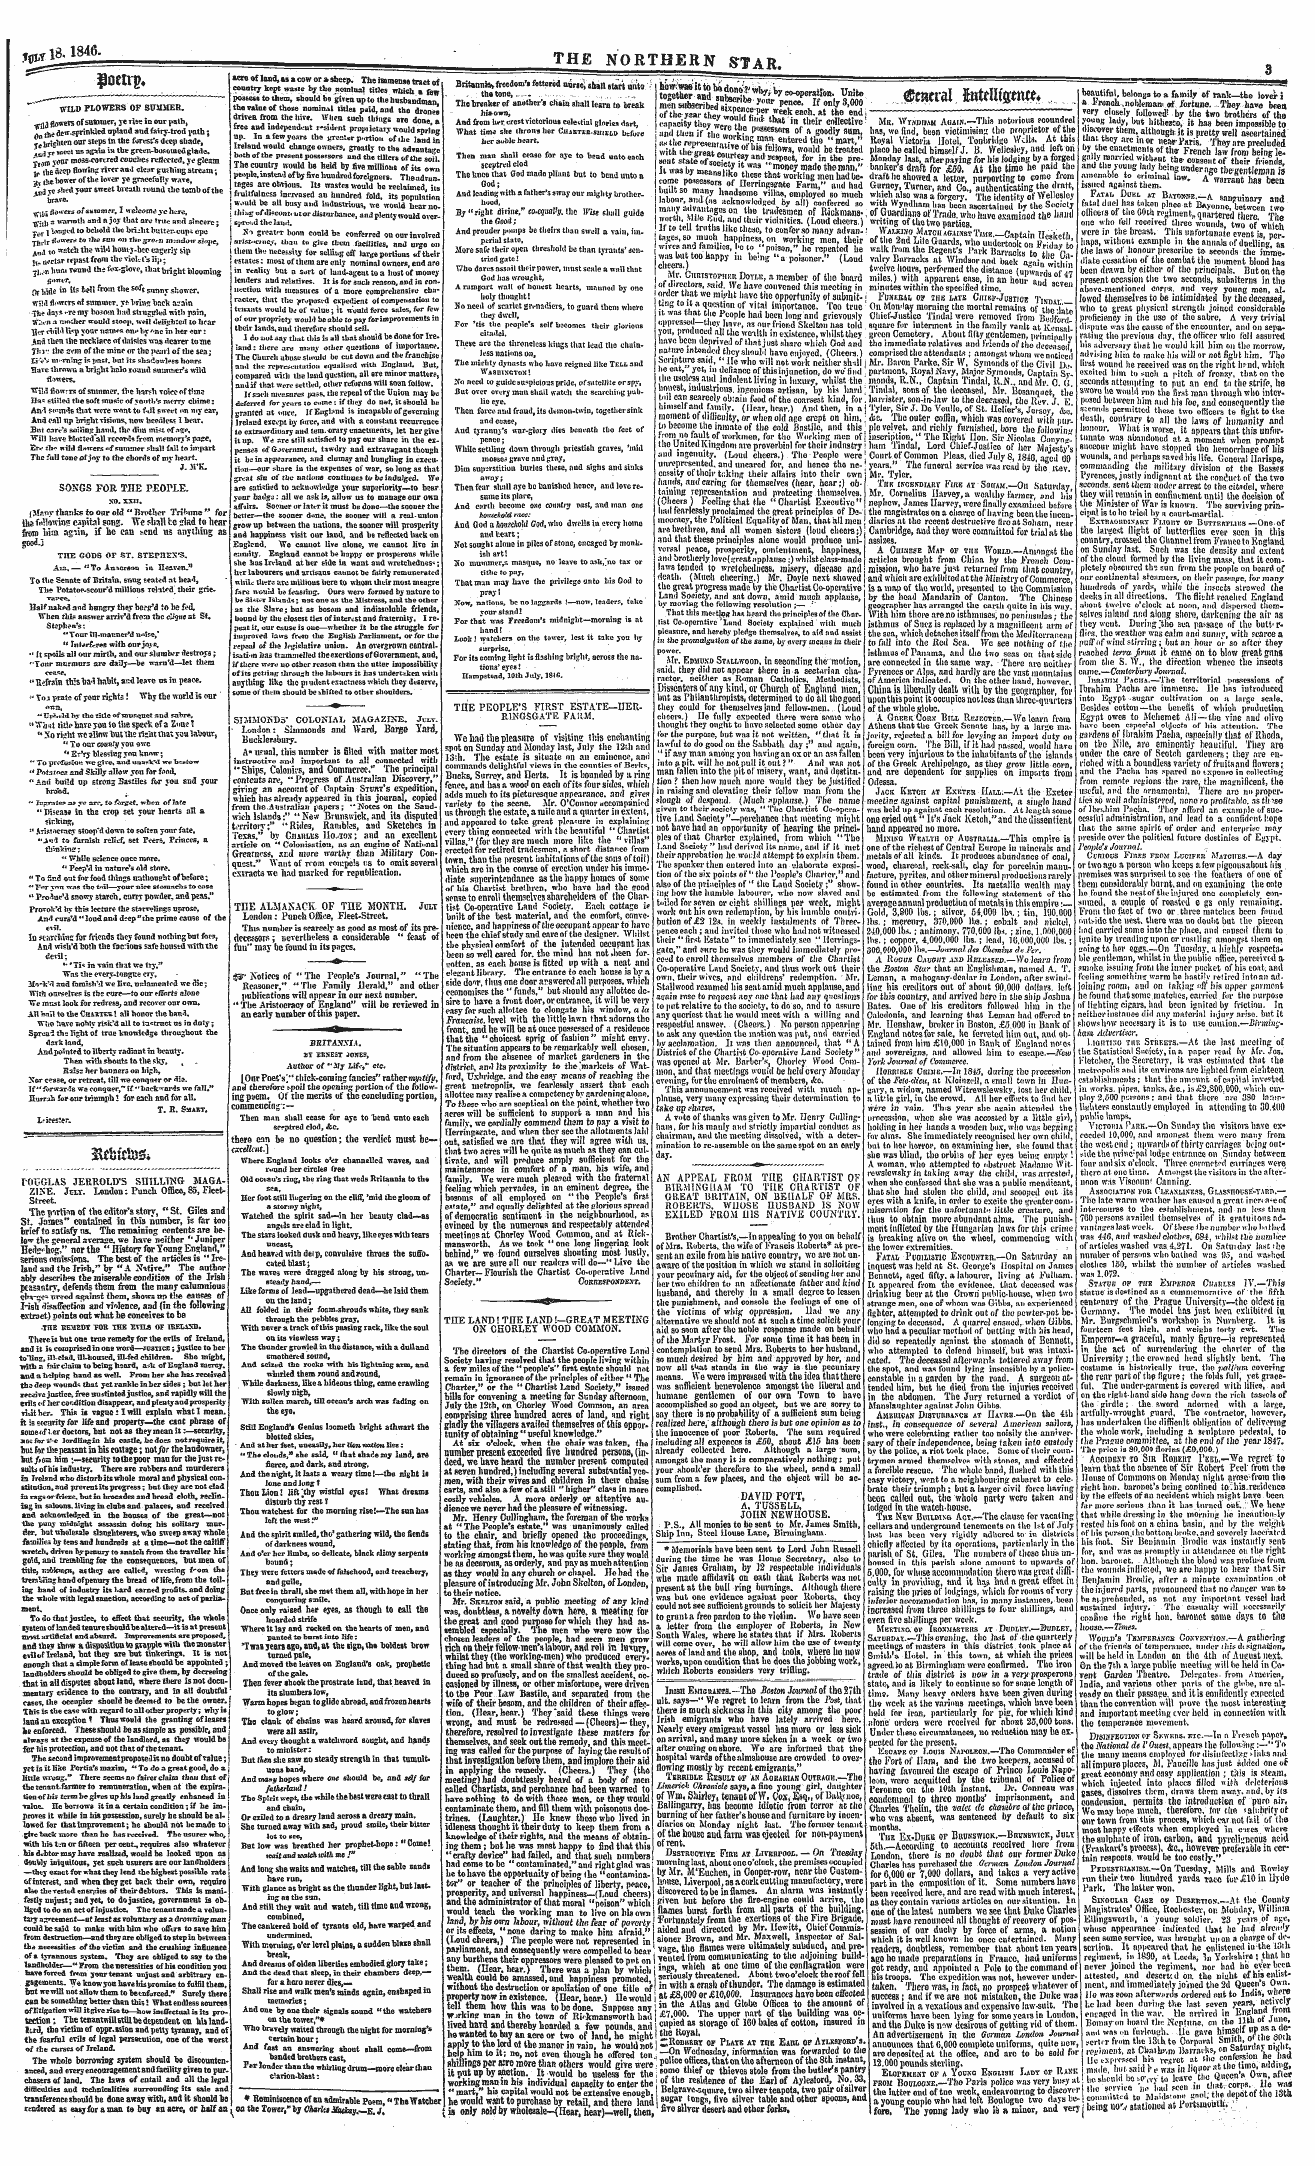 Northern Star (1837-1852): jS F Y, 3rd edition - Imsu Emicnanta.—The Boston Journal Of Th...